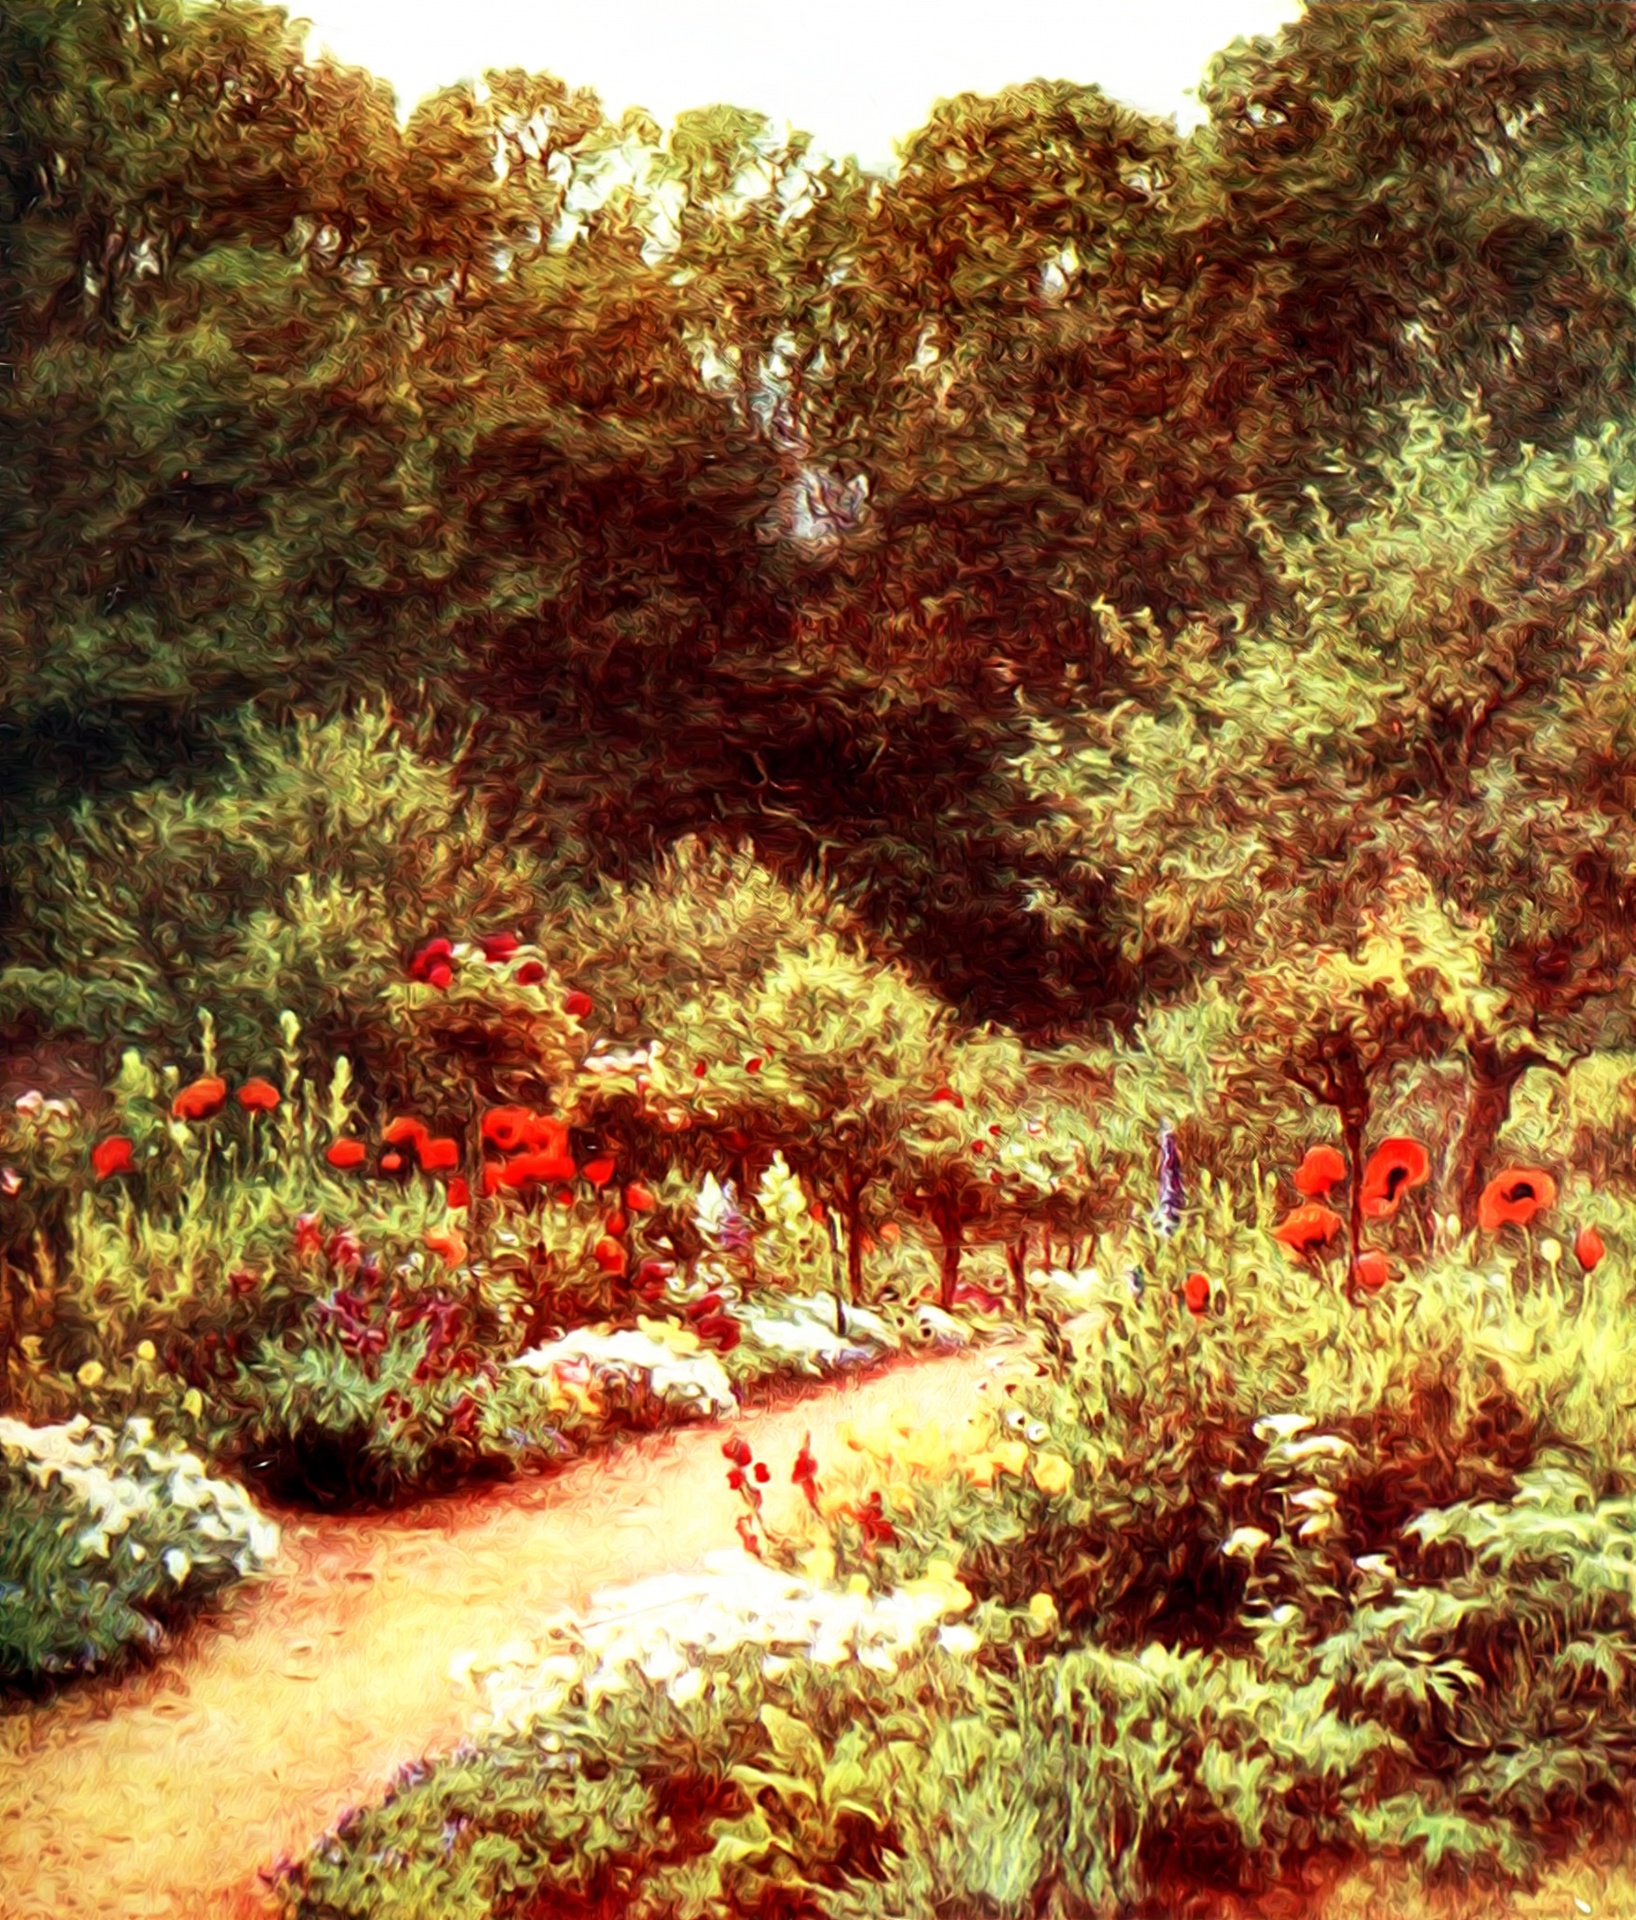 Poppy Garden